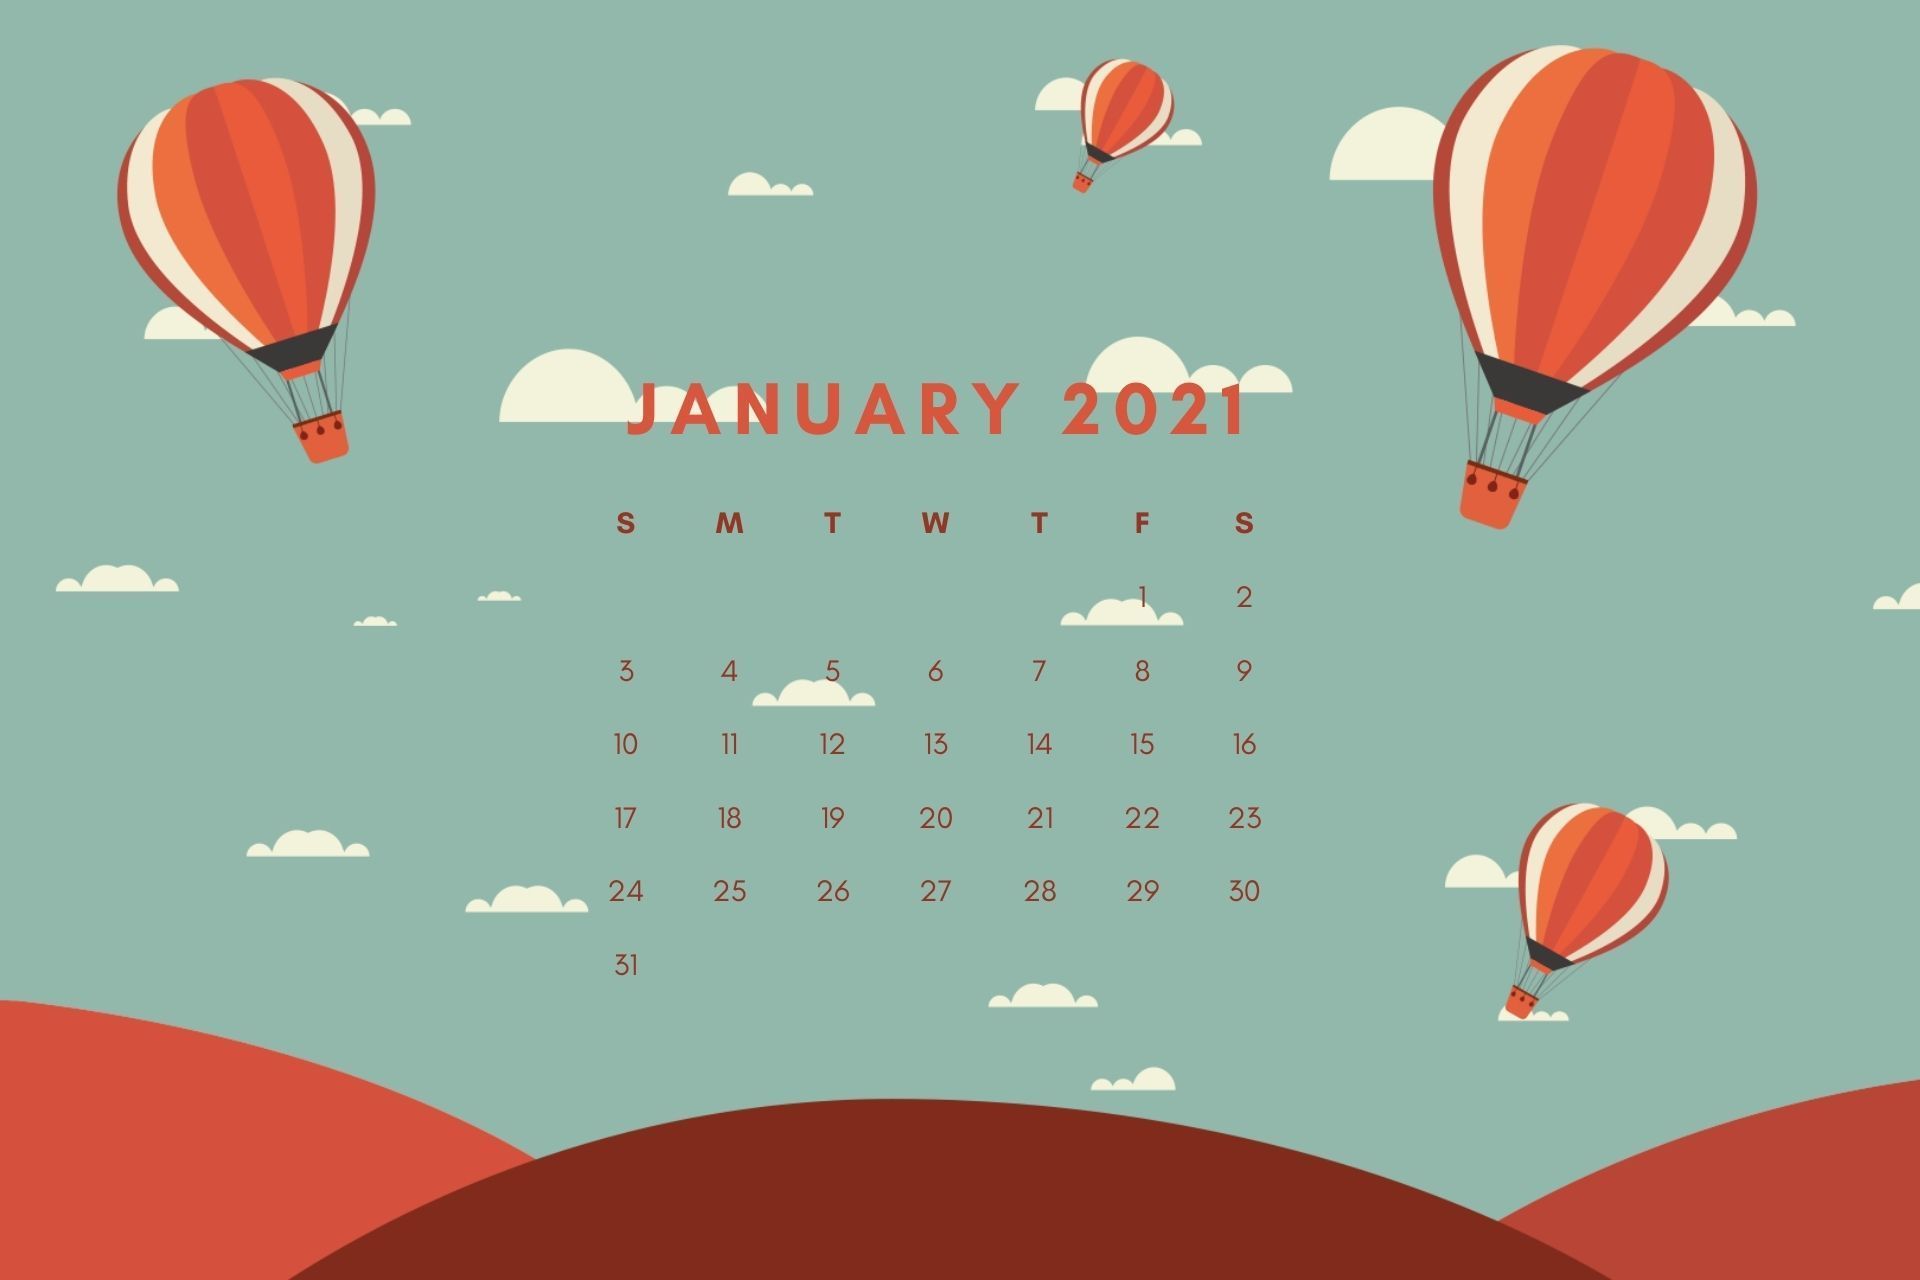 January 2021 Calendar HD Wallpaper Download. Calendar wallpaper, Desktop wallpaper calendar, Calendar